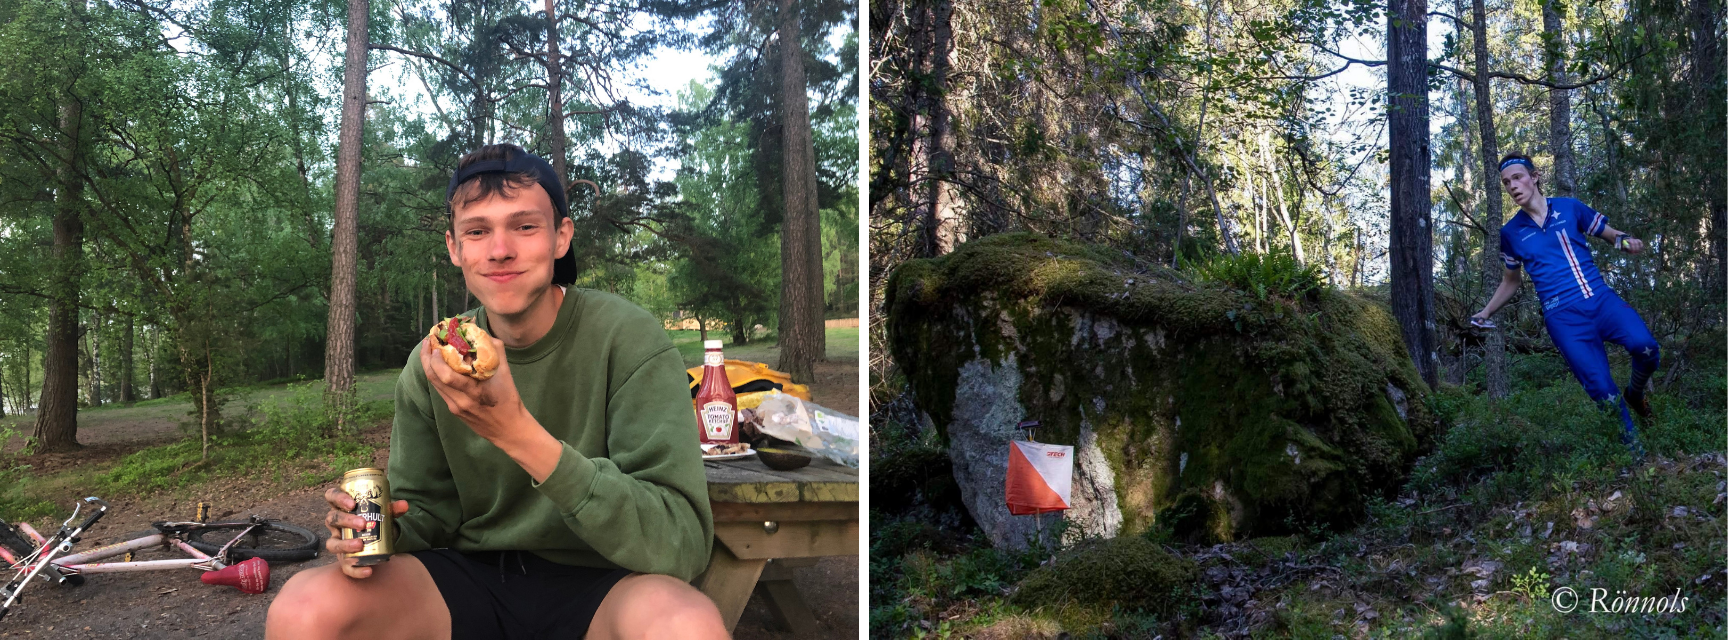 Zac Hudd profile image and Zac Hudd running through woods while orienteering